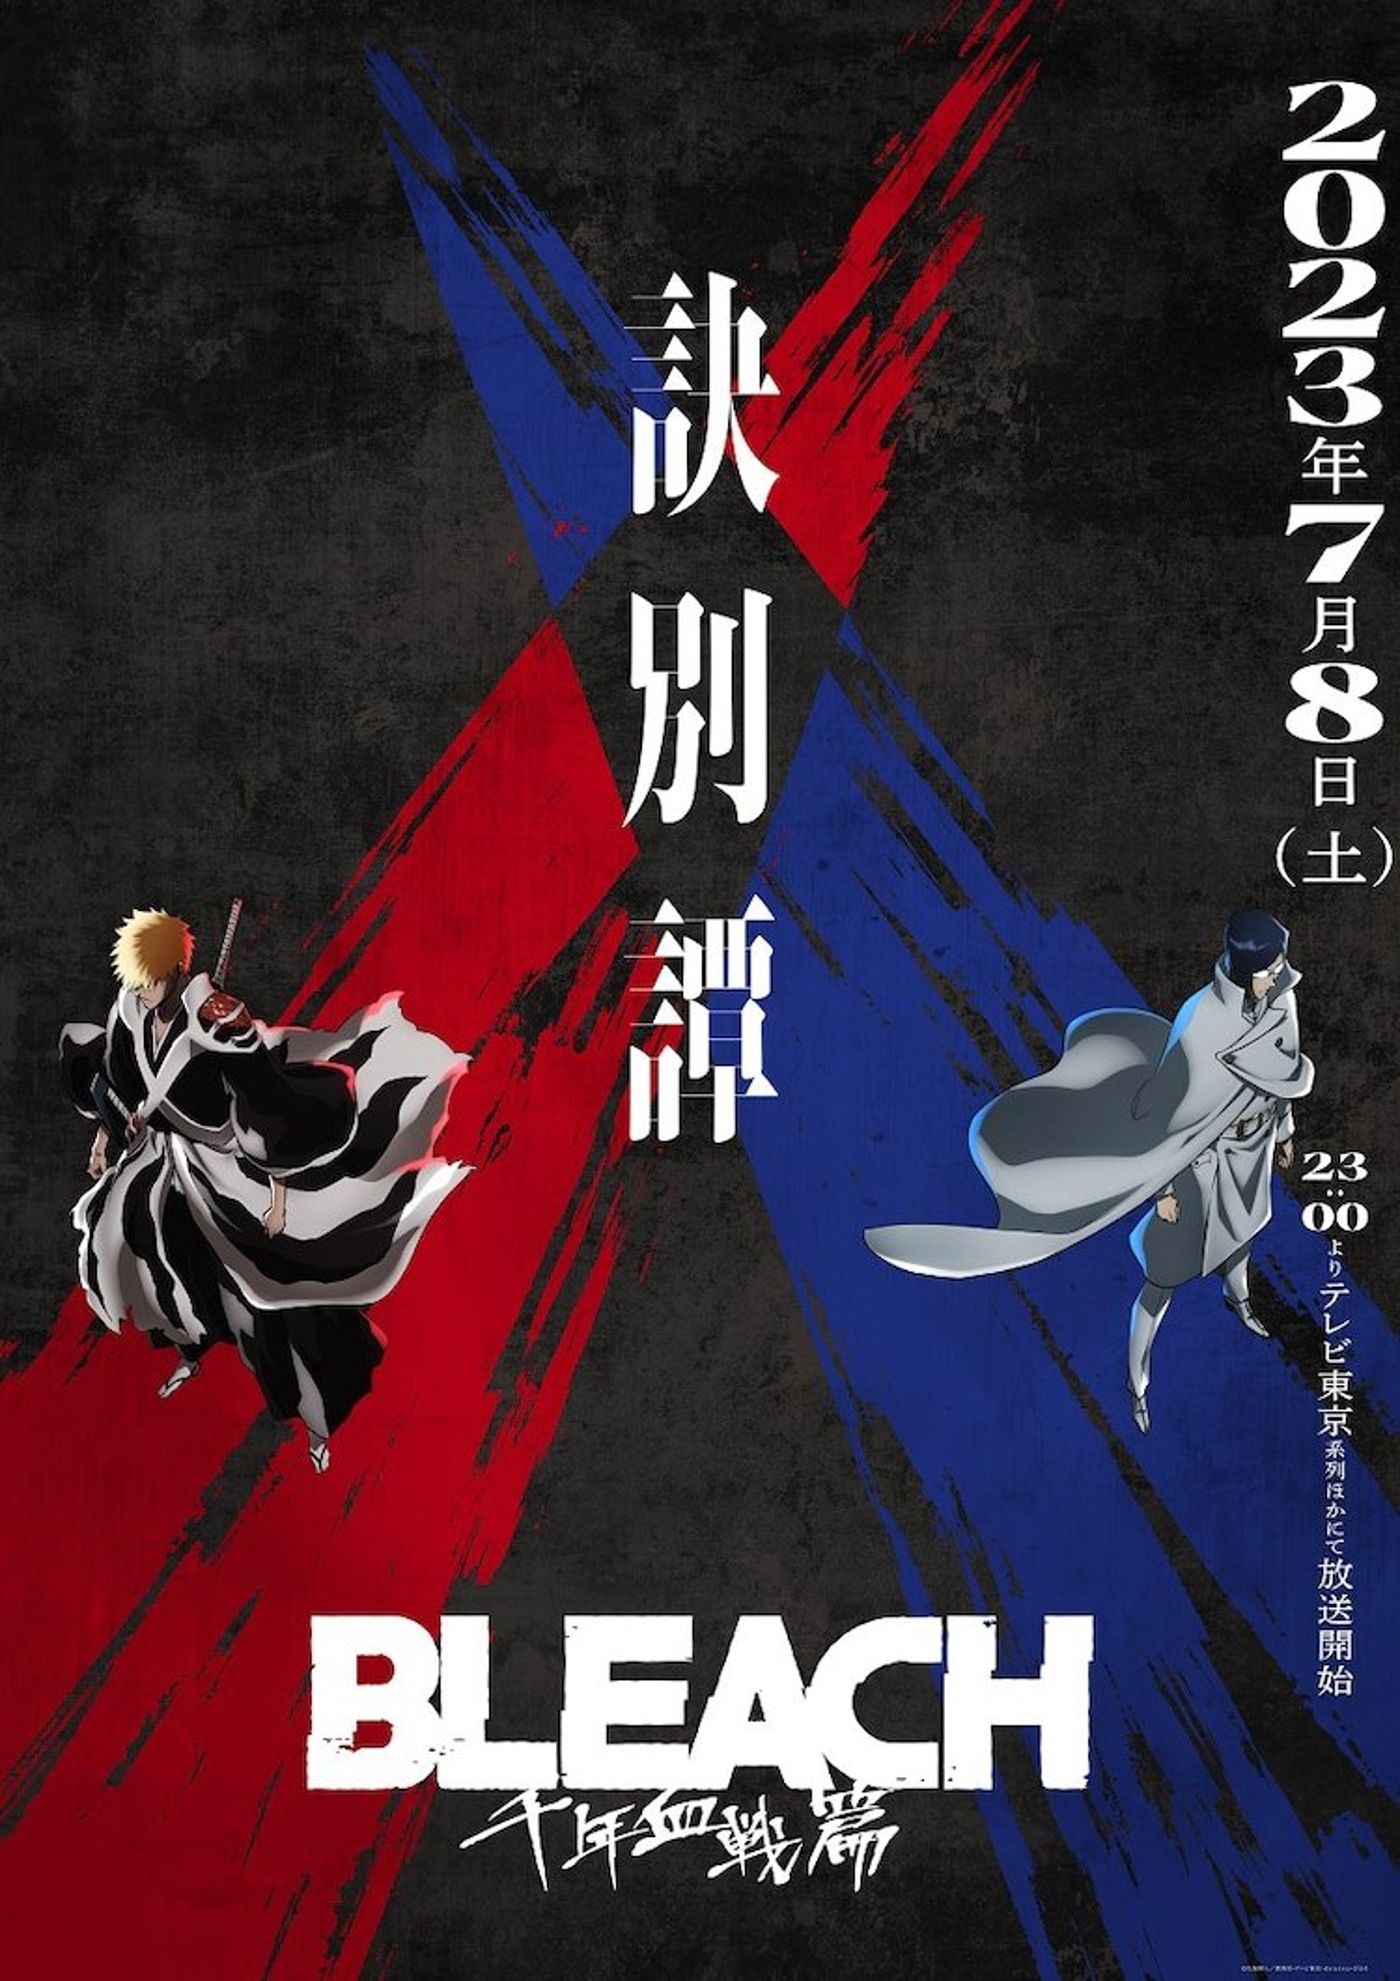 Bleach Thousand-Year Blood War Part 2 Returns With Trailer & Release Date